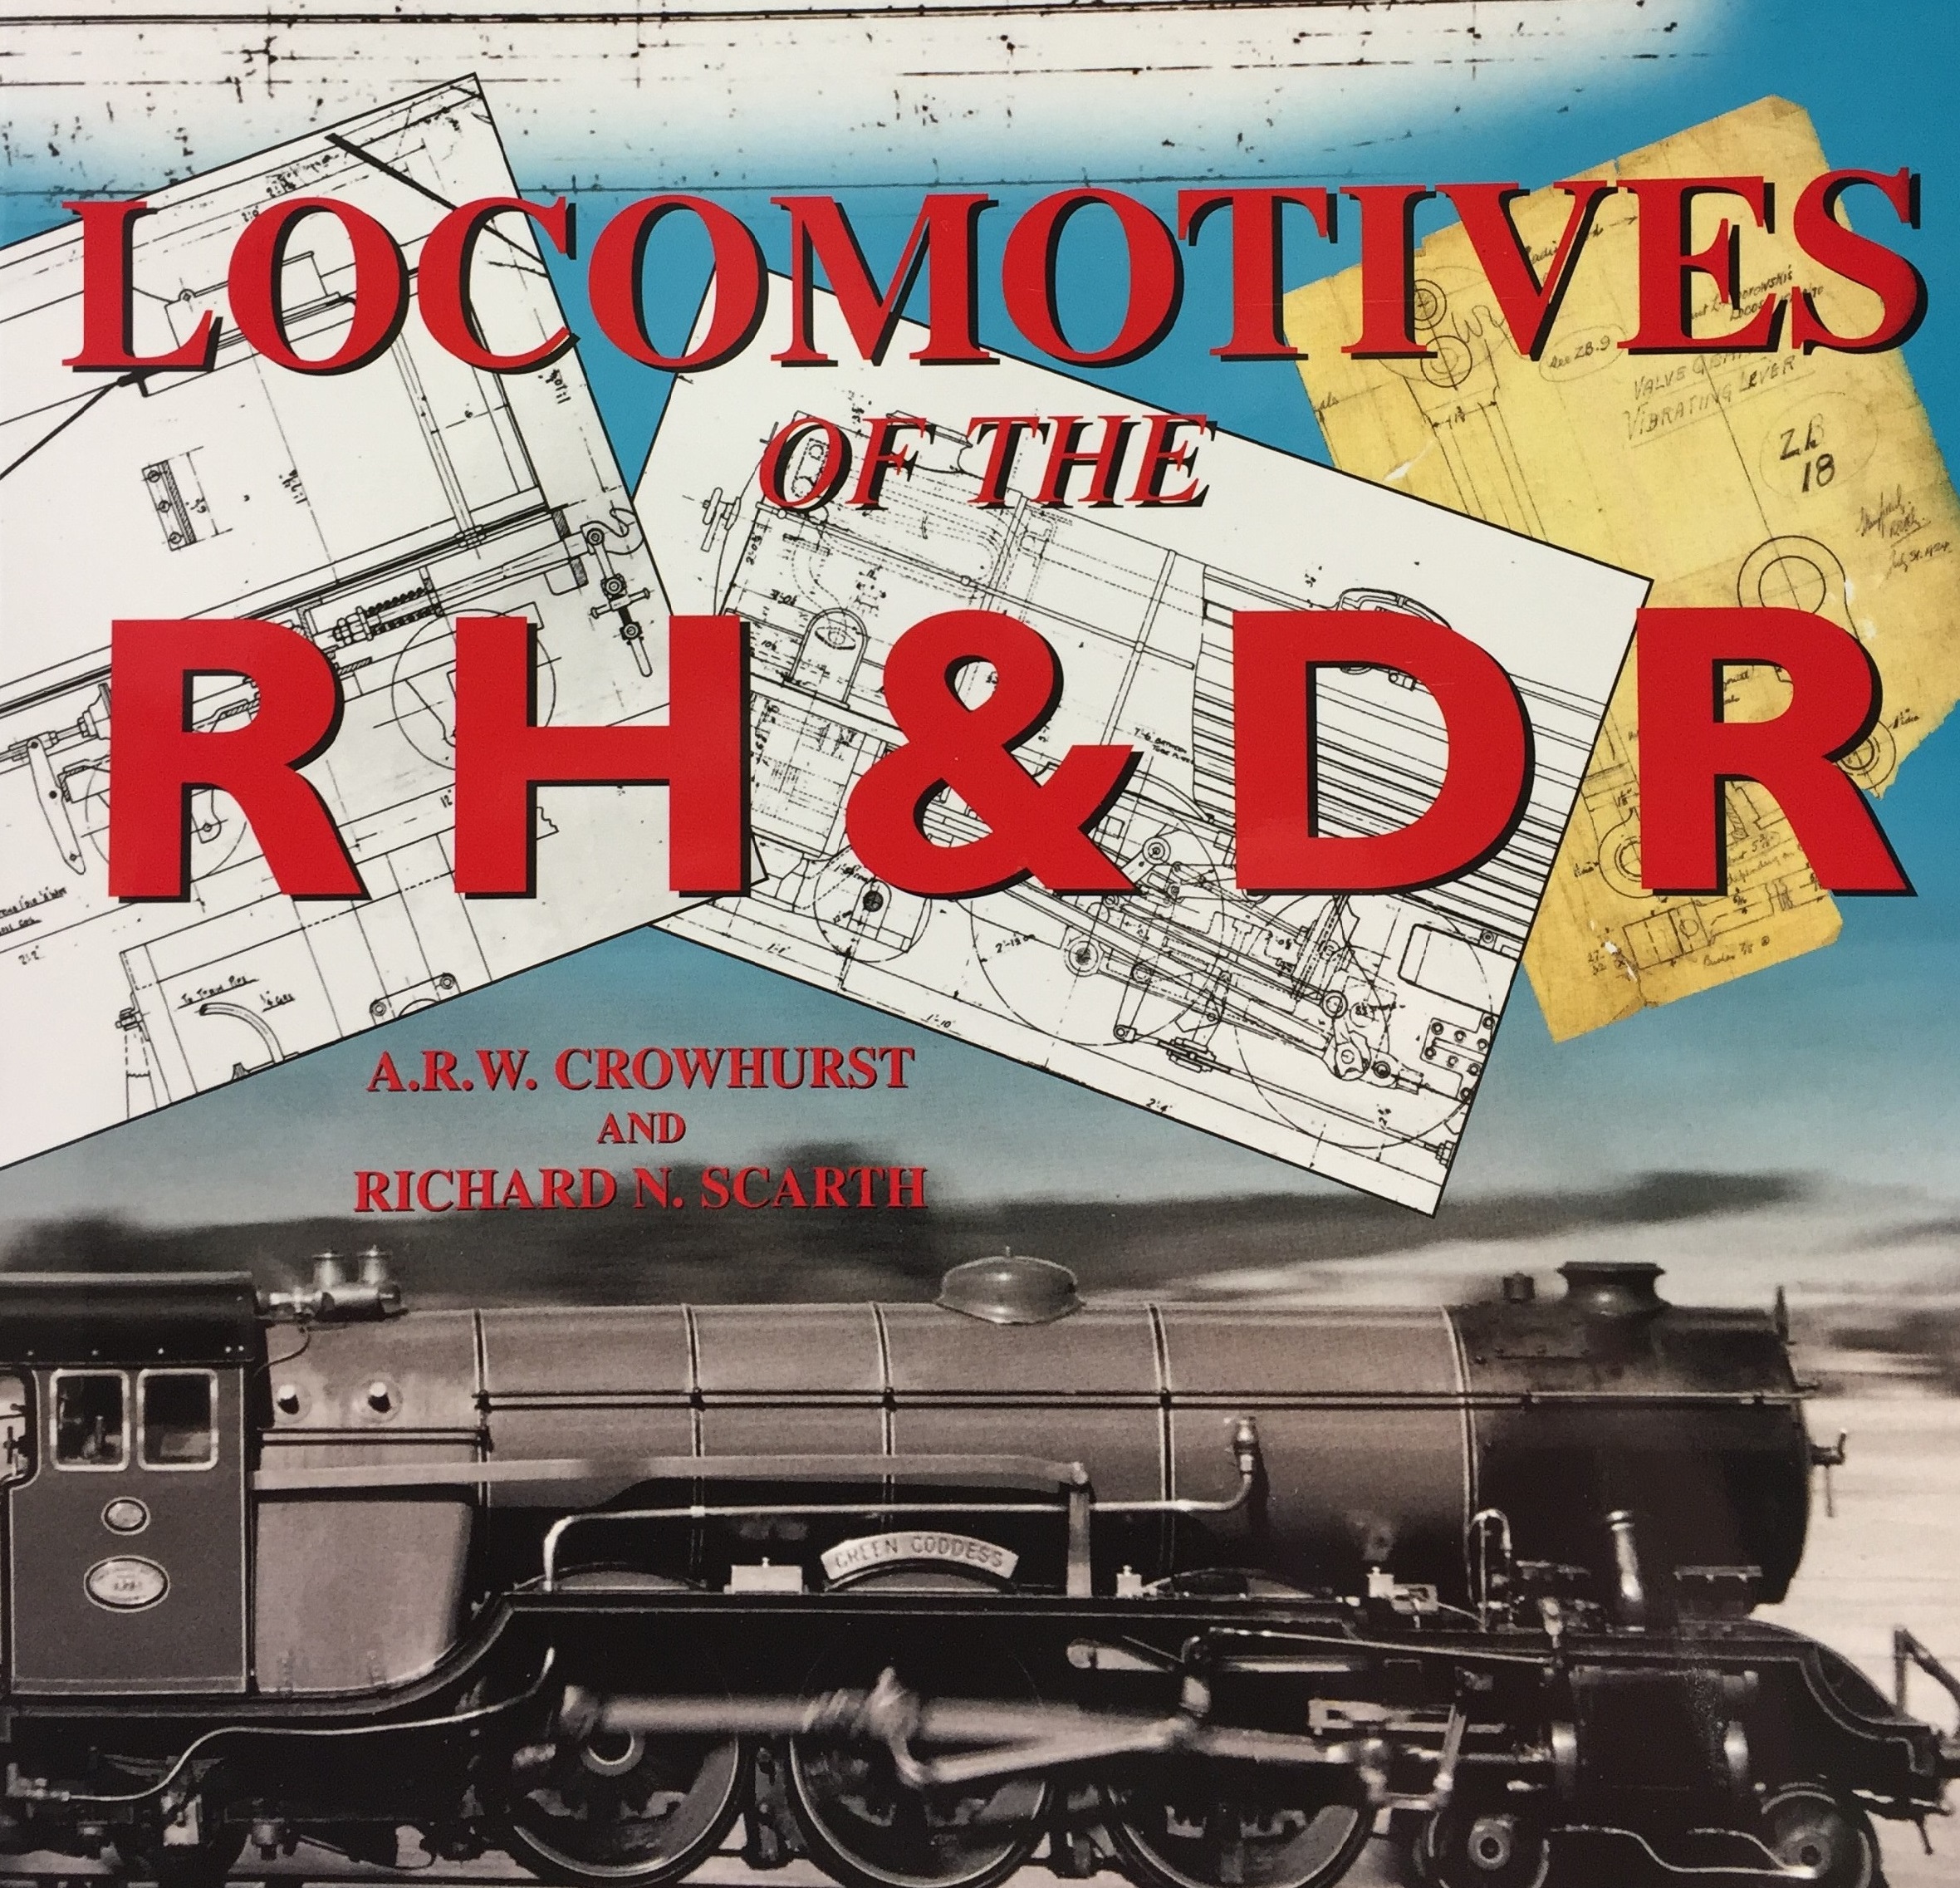 Locomotives of the RH&DR